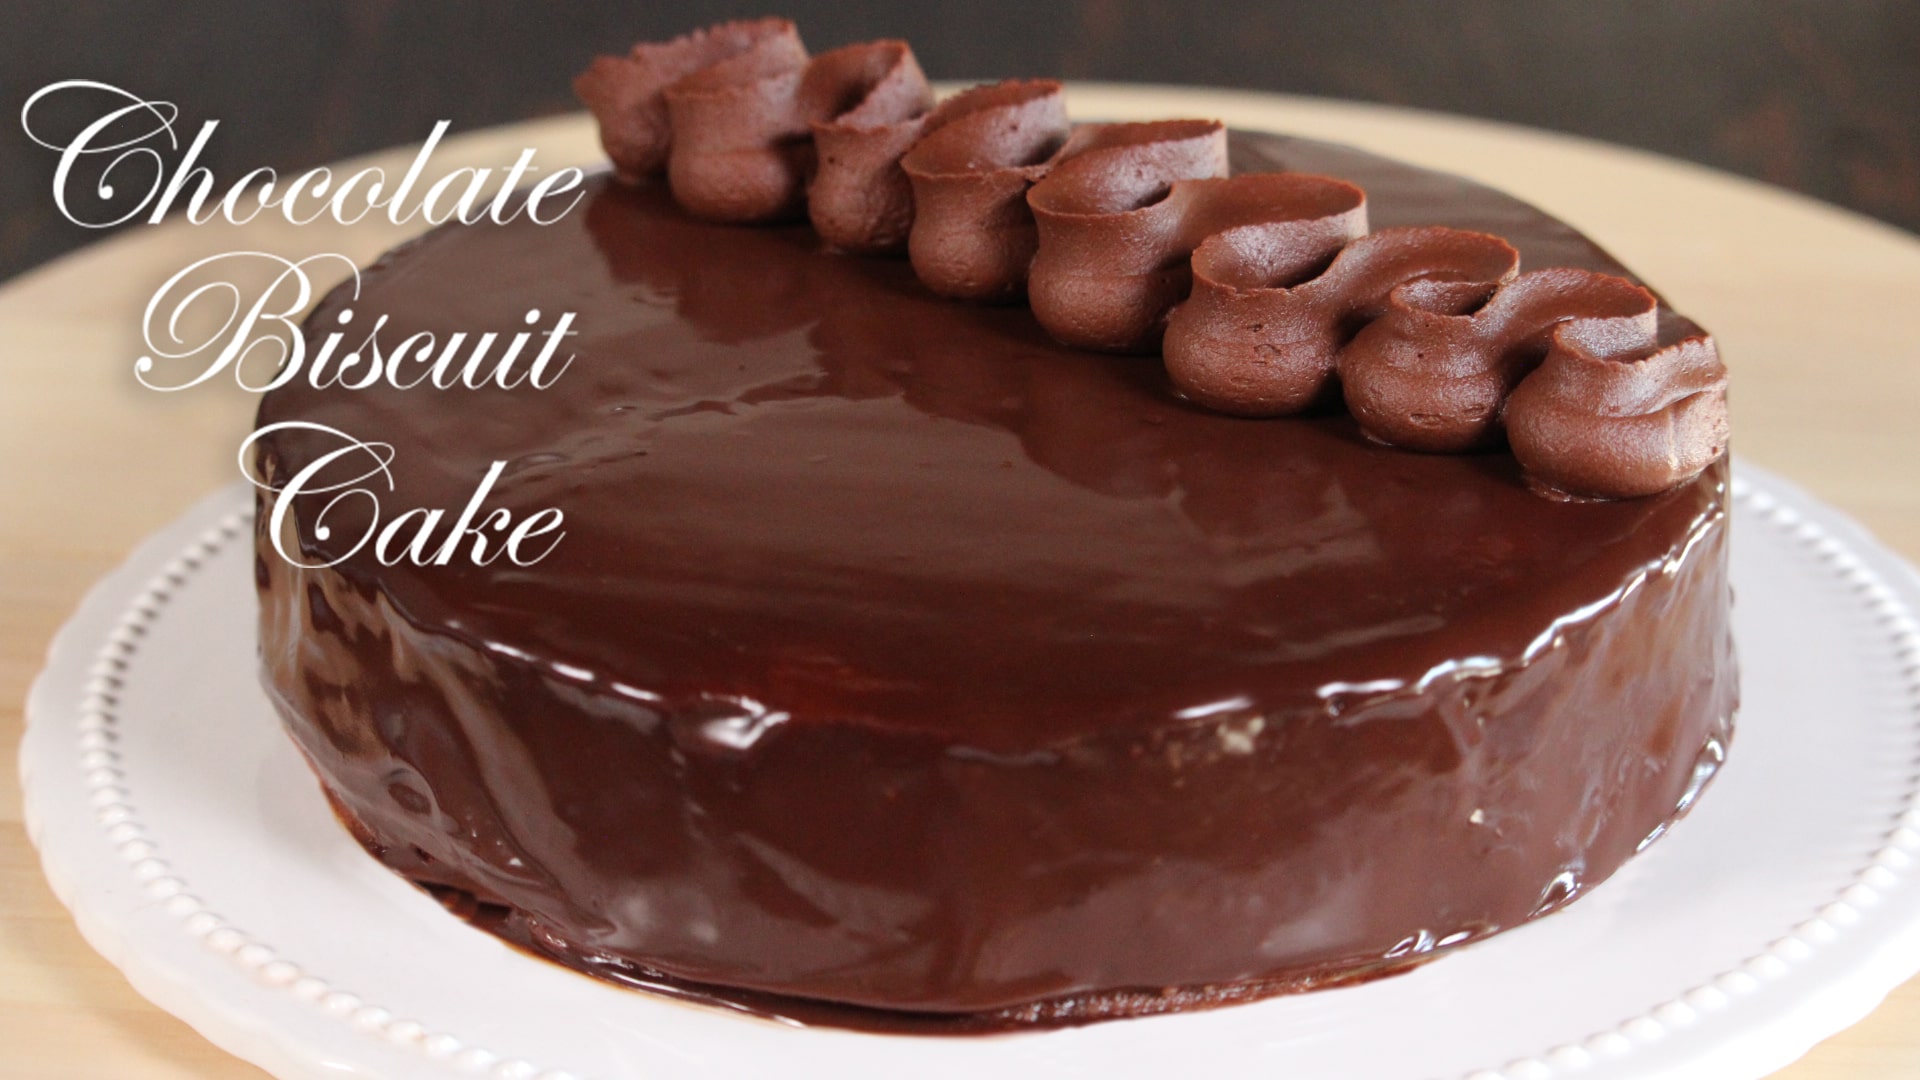 Britannia Marie Gold Chocolate Cake - Easy Cake Video – Gayathri's Cook Spot